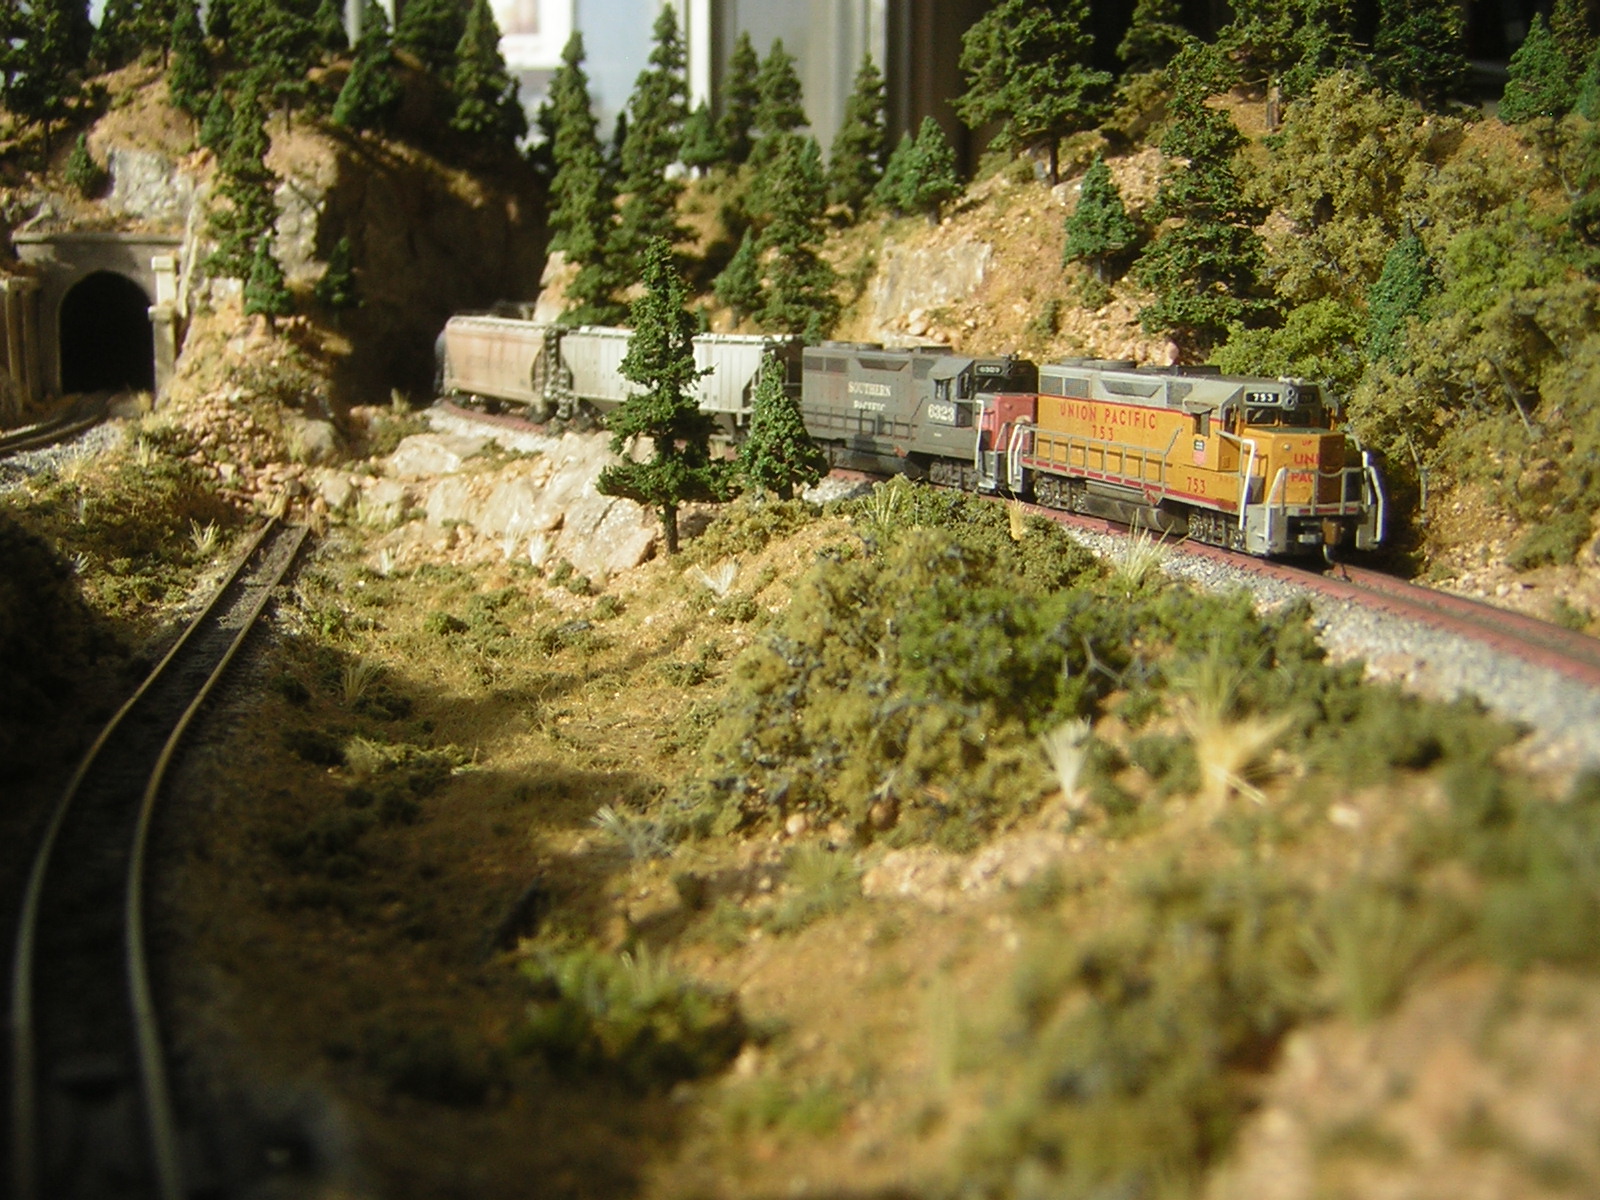 z scale model trains